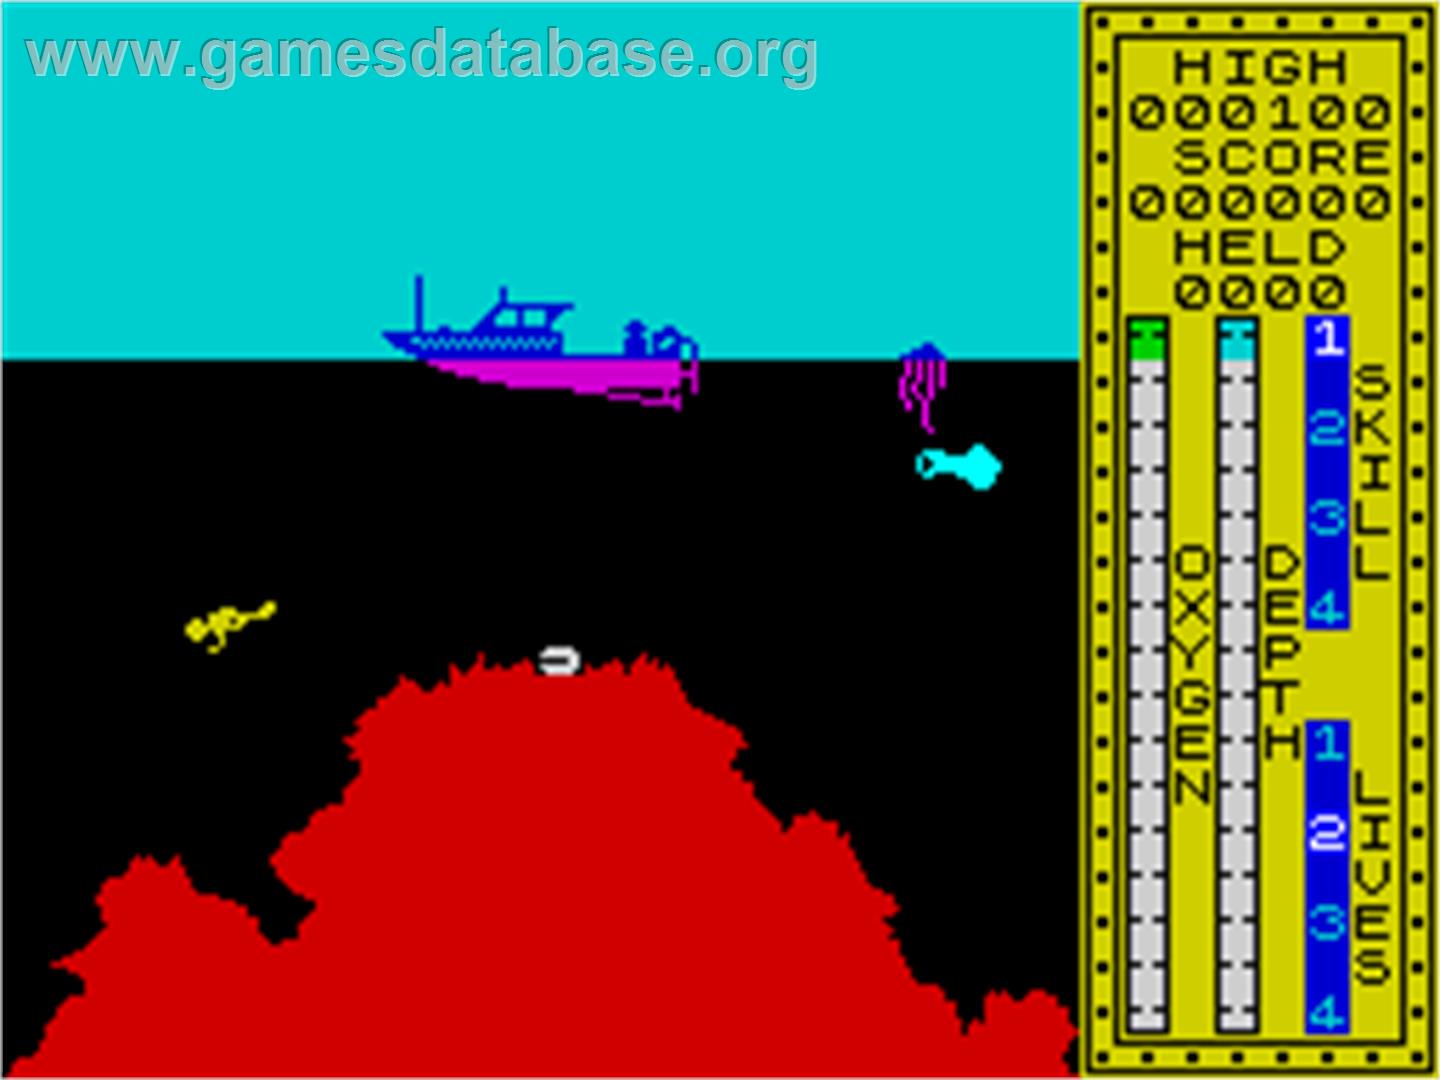 Scuba Dive - Sinclair ZX Spectrum - Artwork - In Game